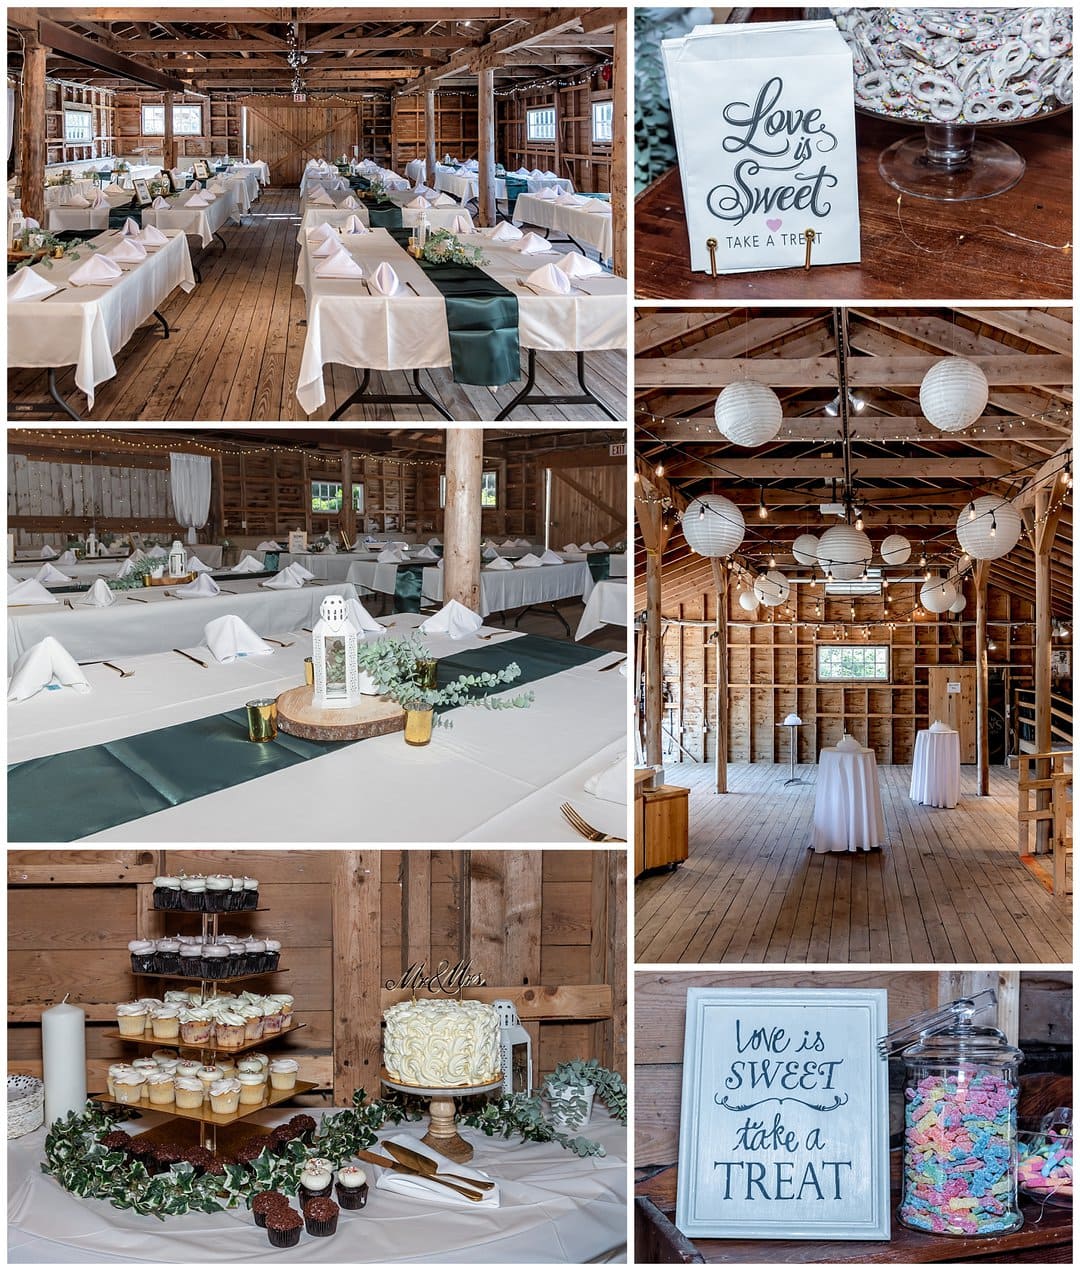 A wedding reception set up at the Hubbards Barn in Nova Scotia.